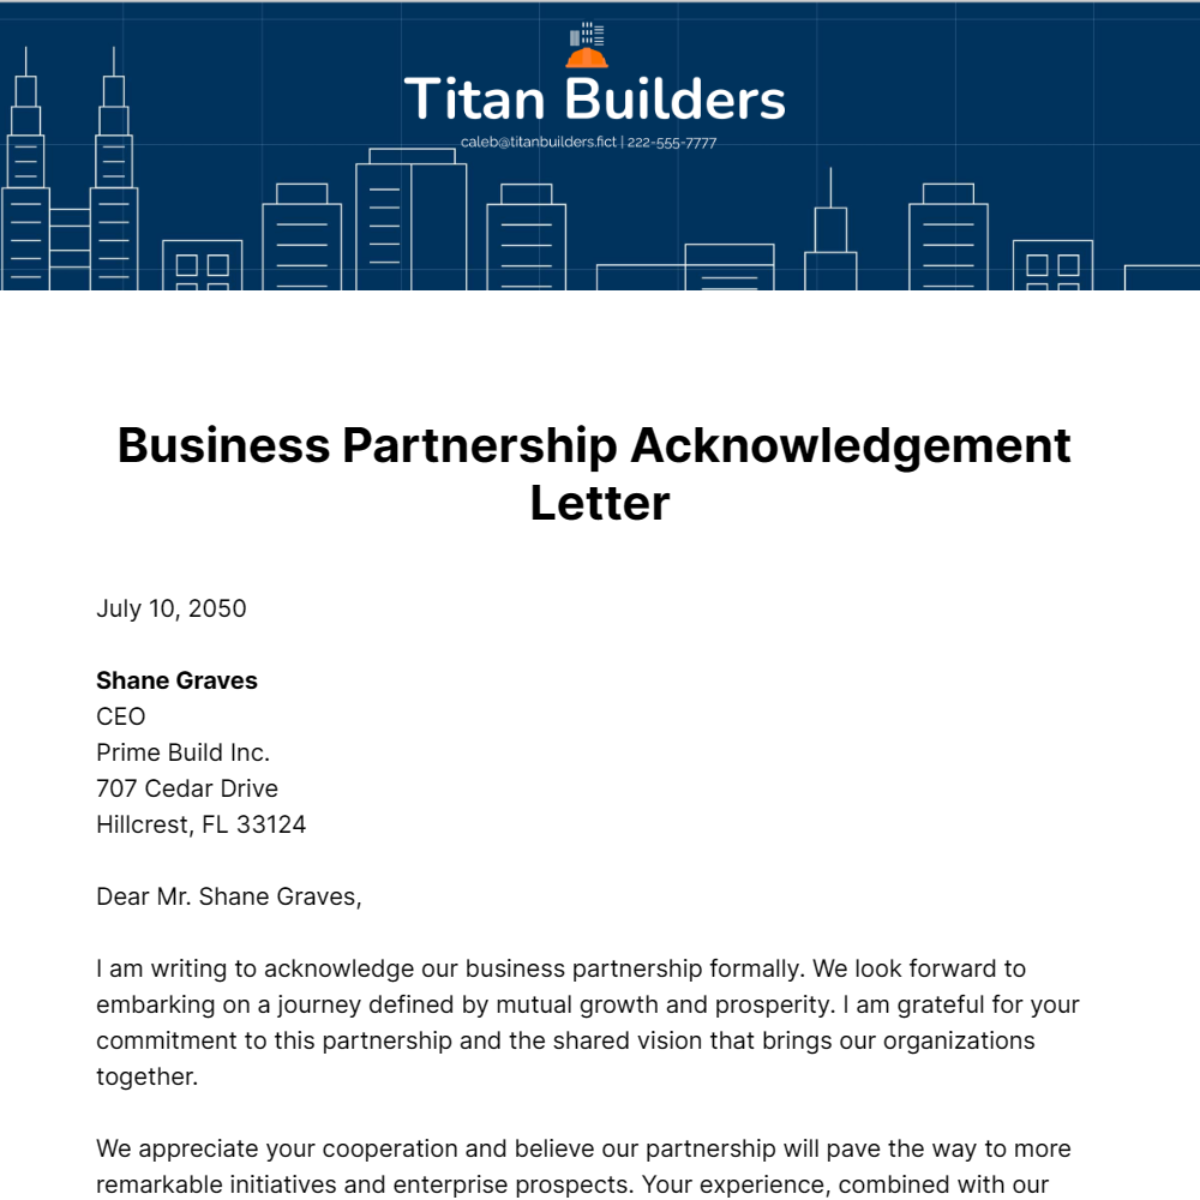 Business Partnership Acknowledgement Letter Template